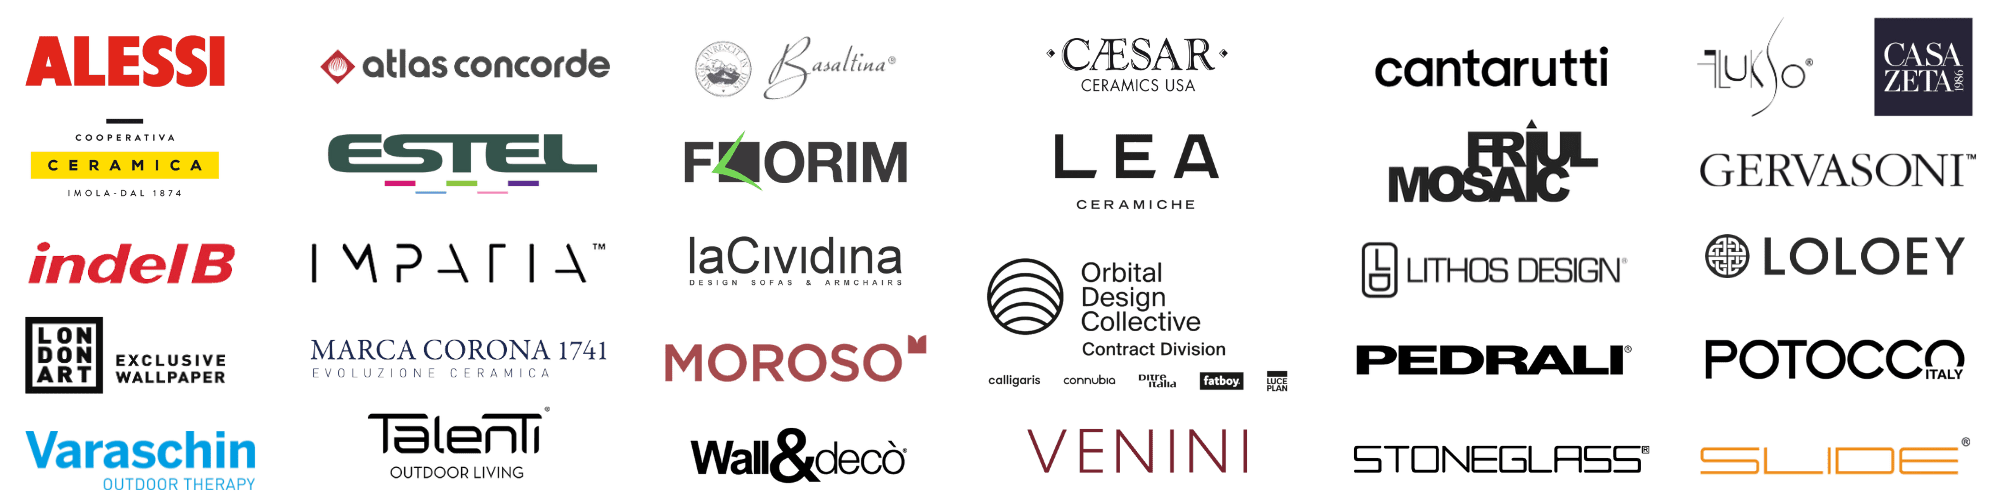 Italian Contract 4HD - exhibiting brands